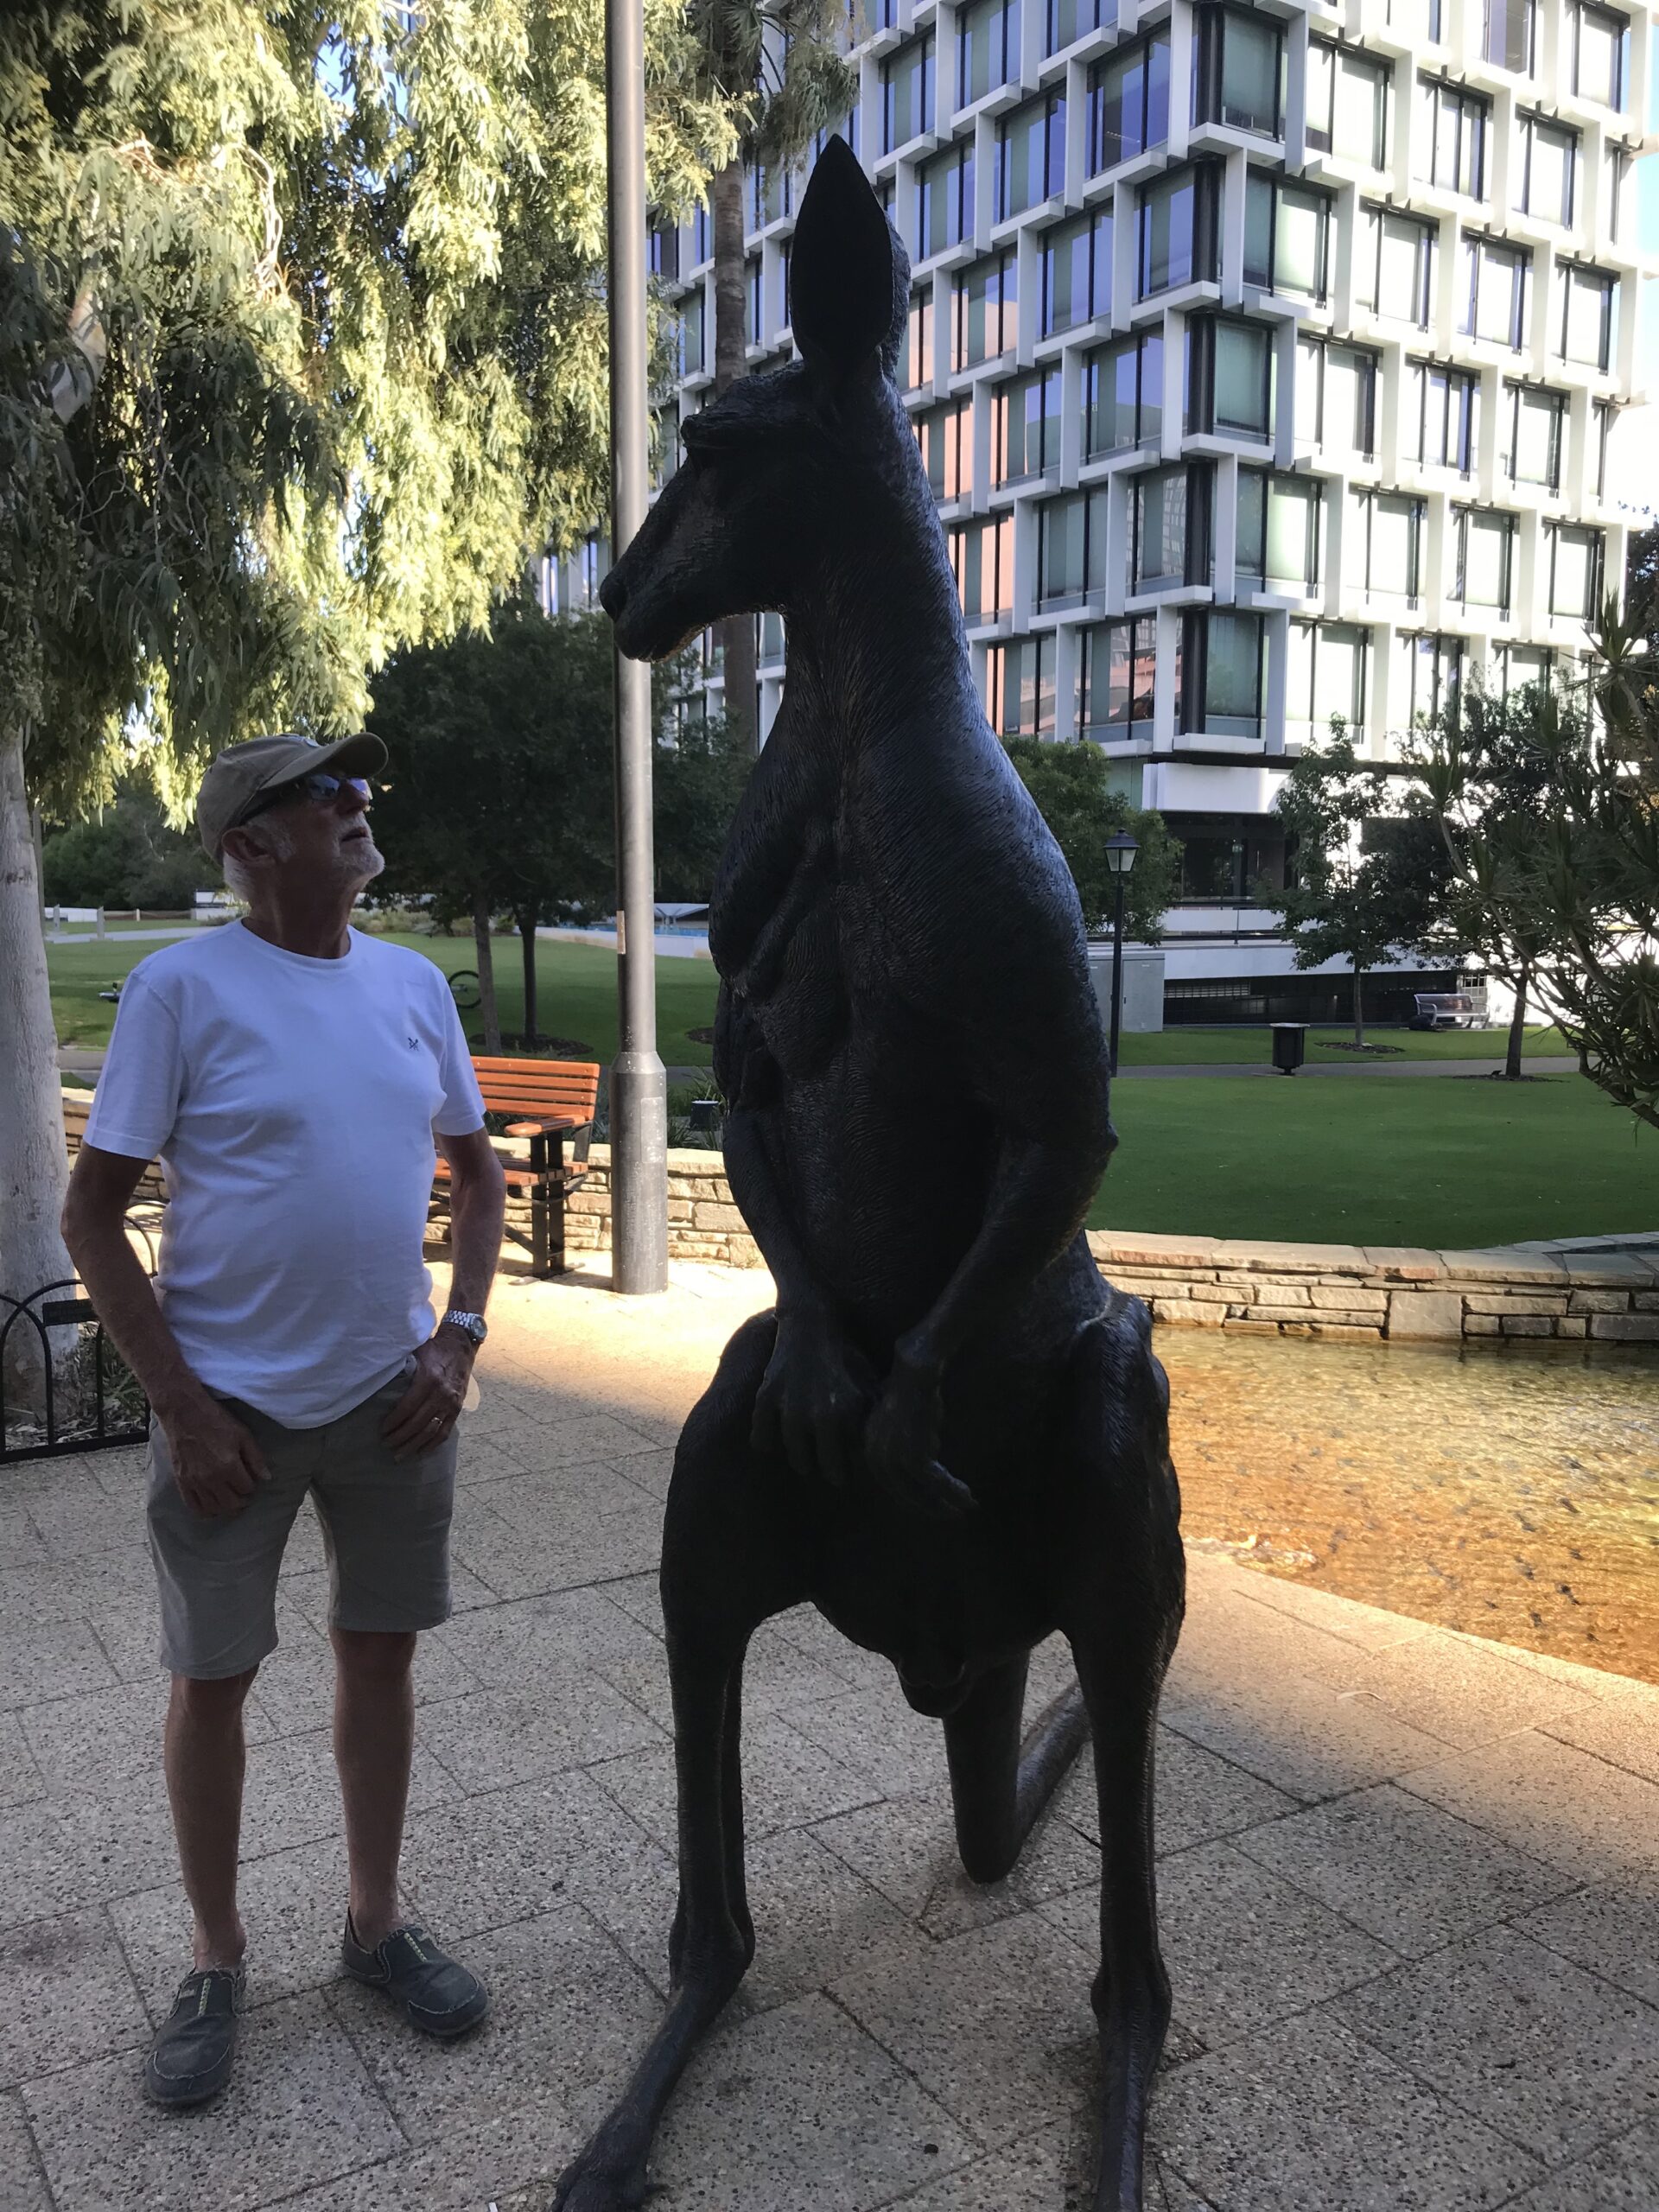 Perth, Steve with kangaroo